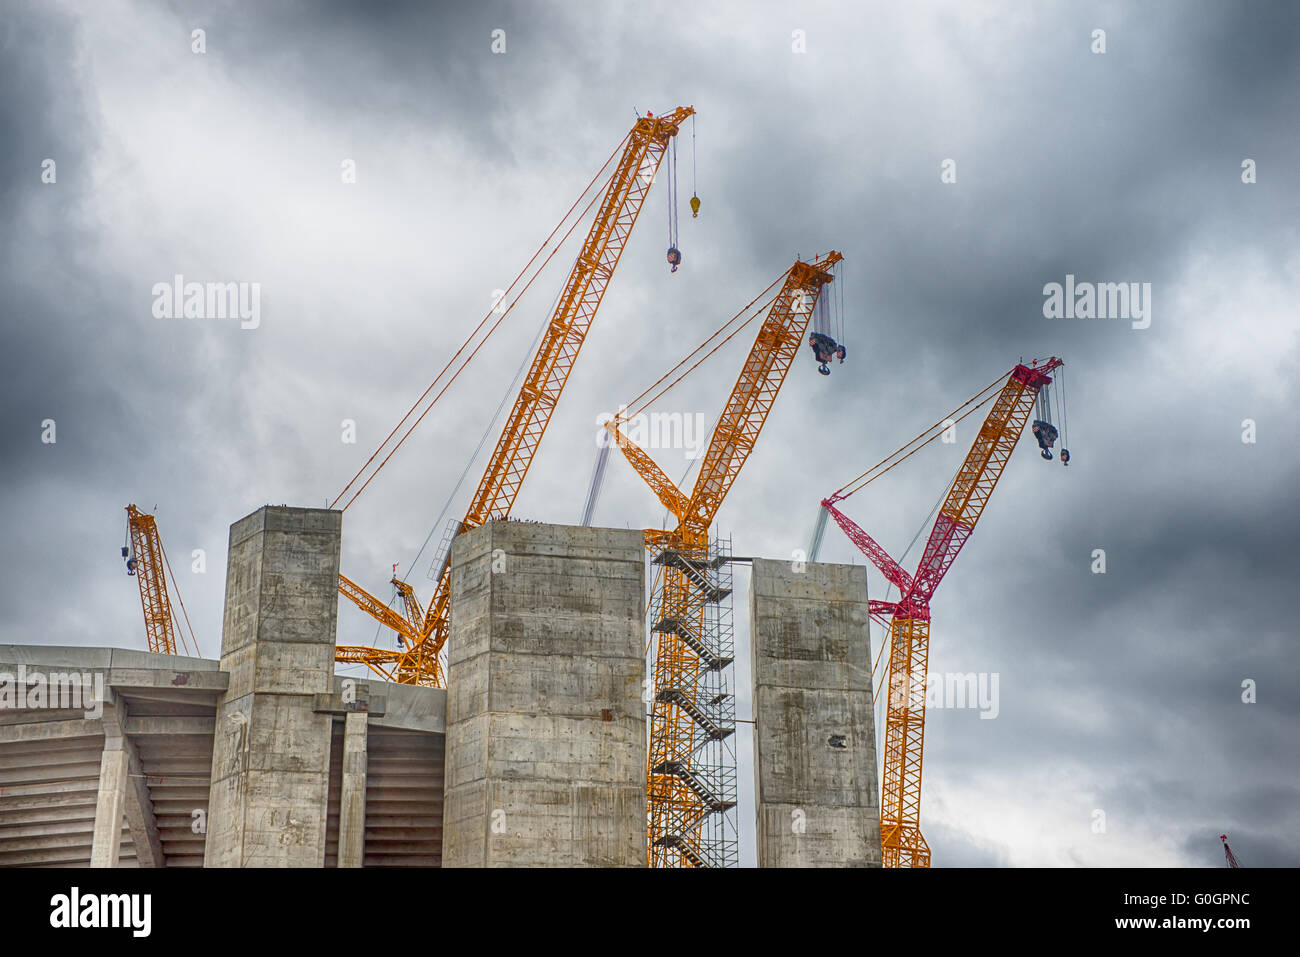 heavy construction cranes erecting concrete building Stock Photo